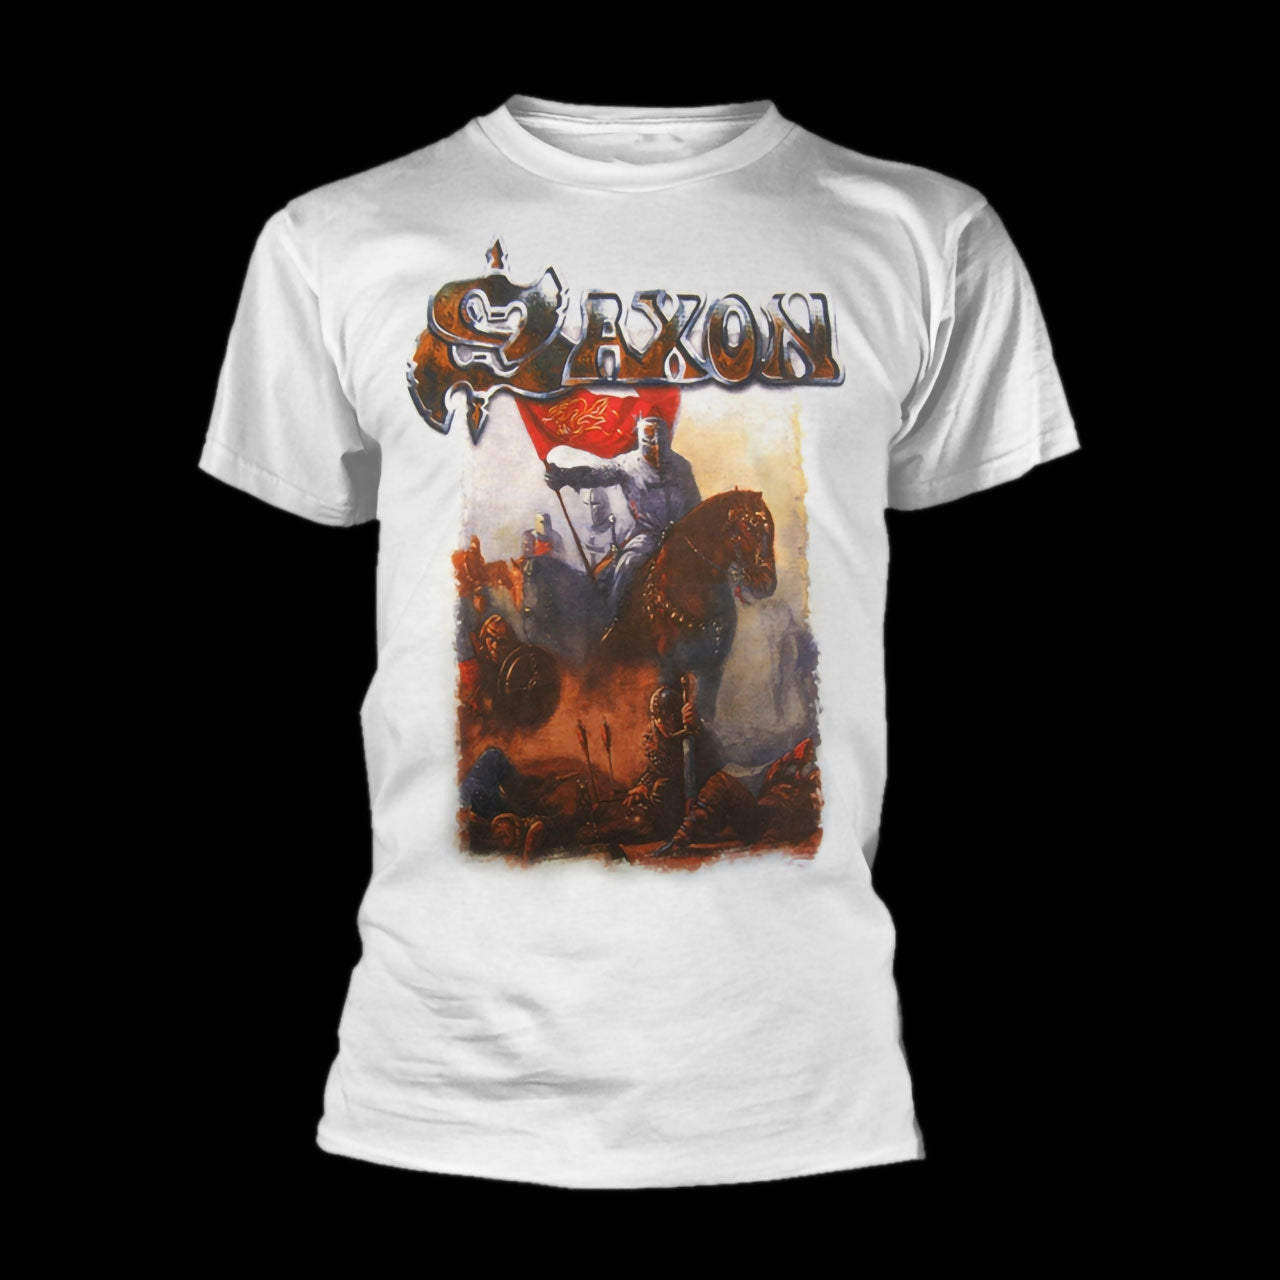 Saxon - Crusader (White) (T-Shirt)